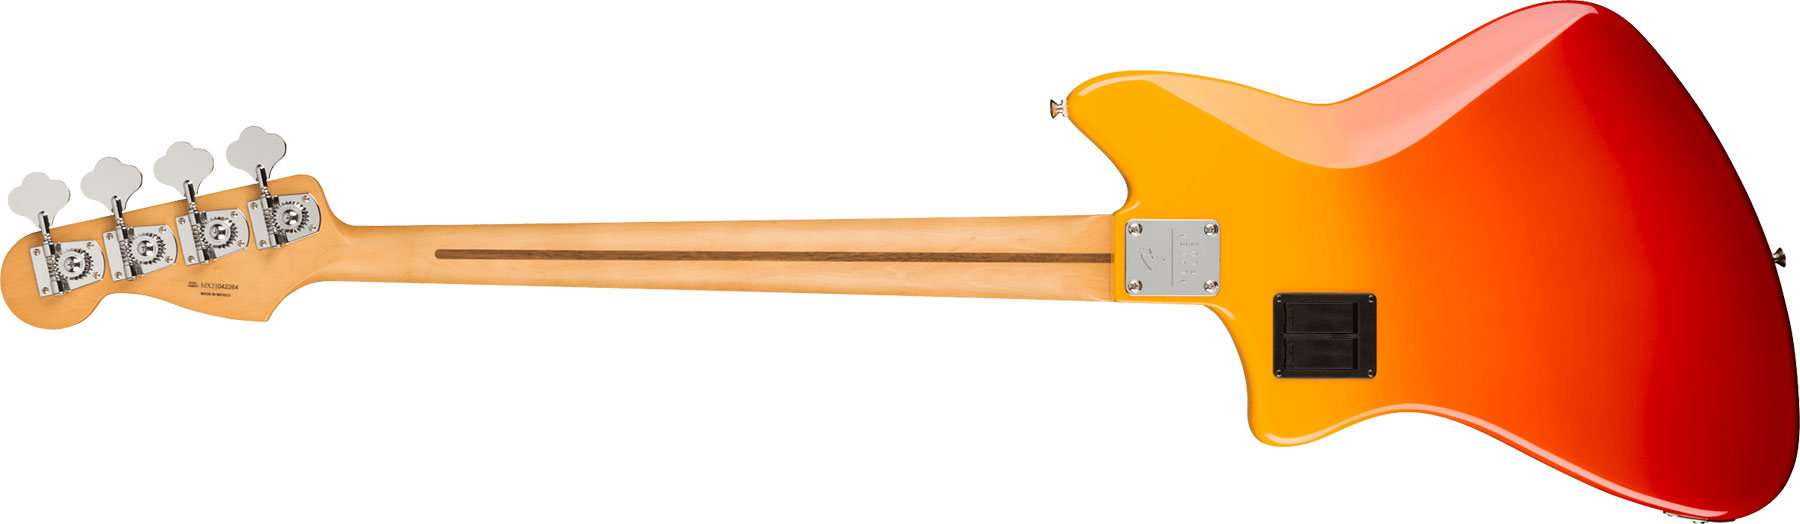 Fender Meteora Bass Active Player Plus Mex Pf - Tequila Sunrise - Basse Électrique Solid Body - Variation 1